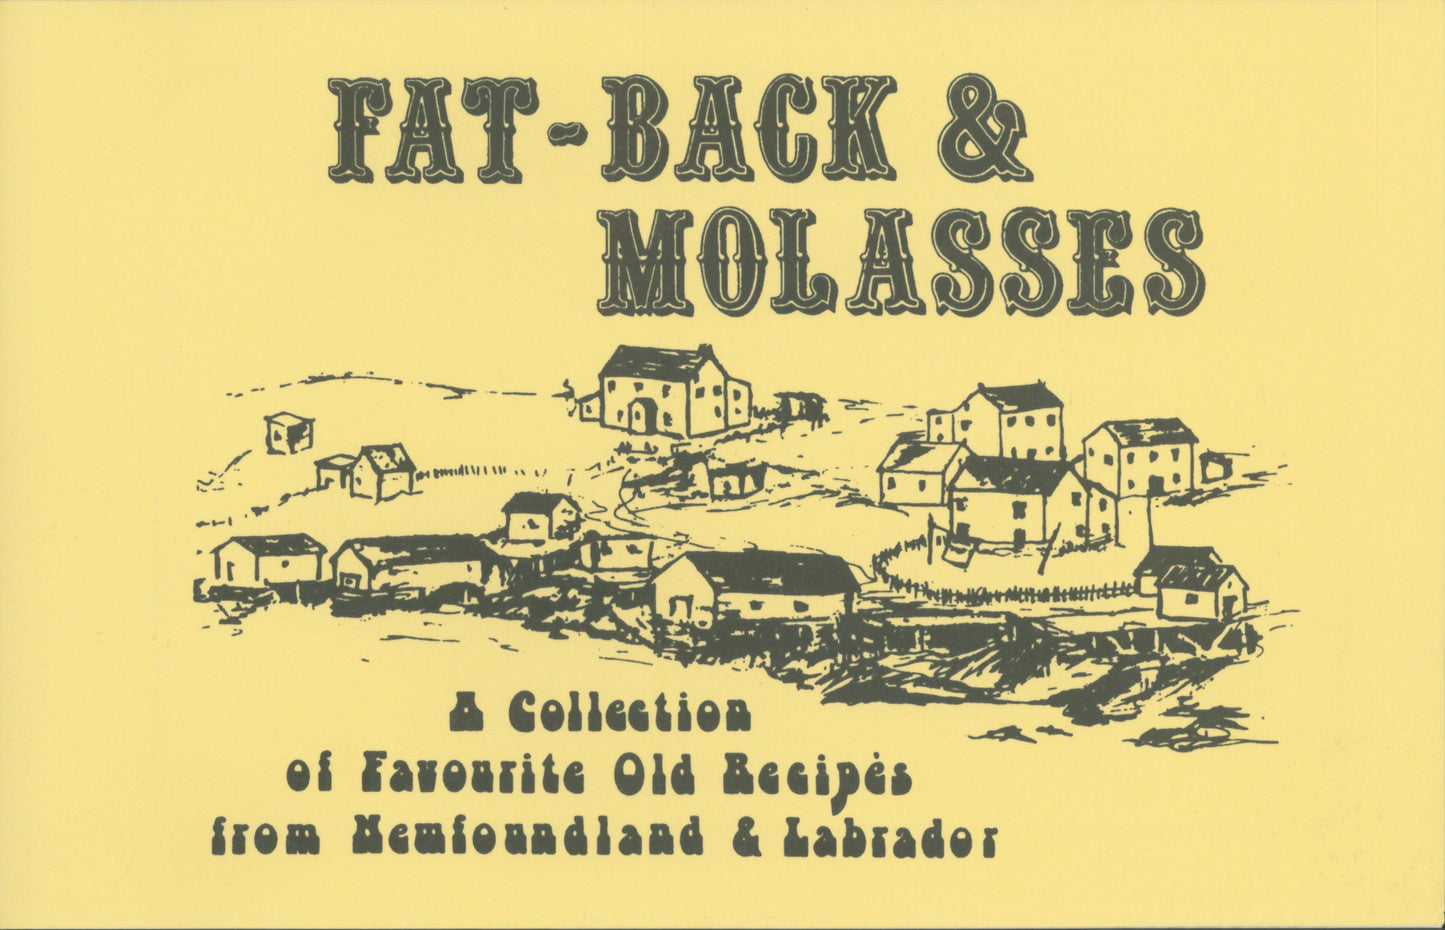 Fat-Back & Molasses by Ivan Jesperson